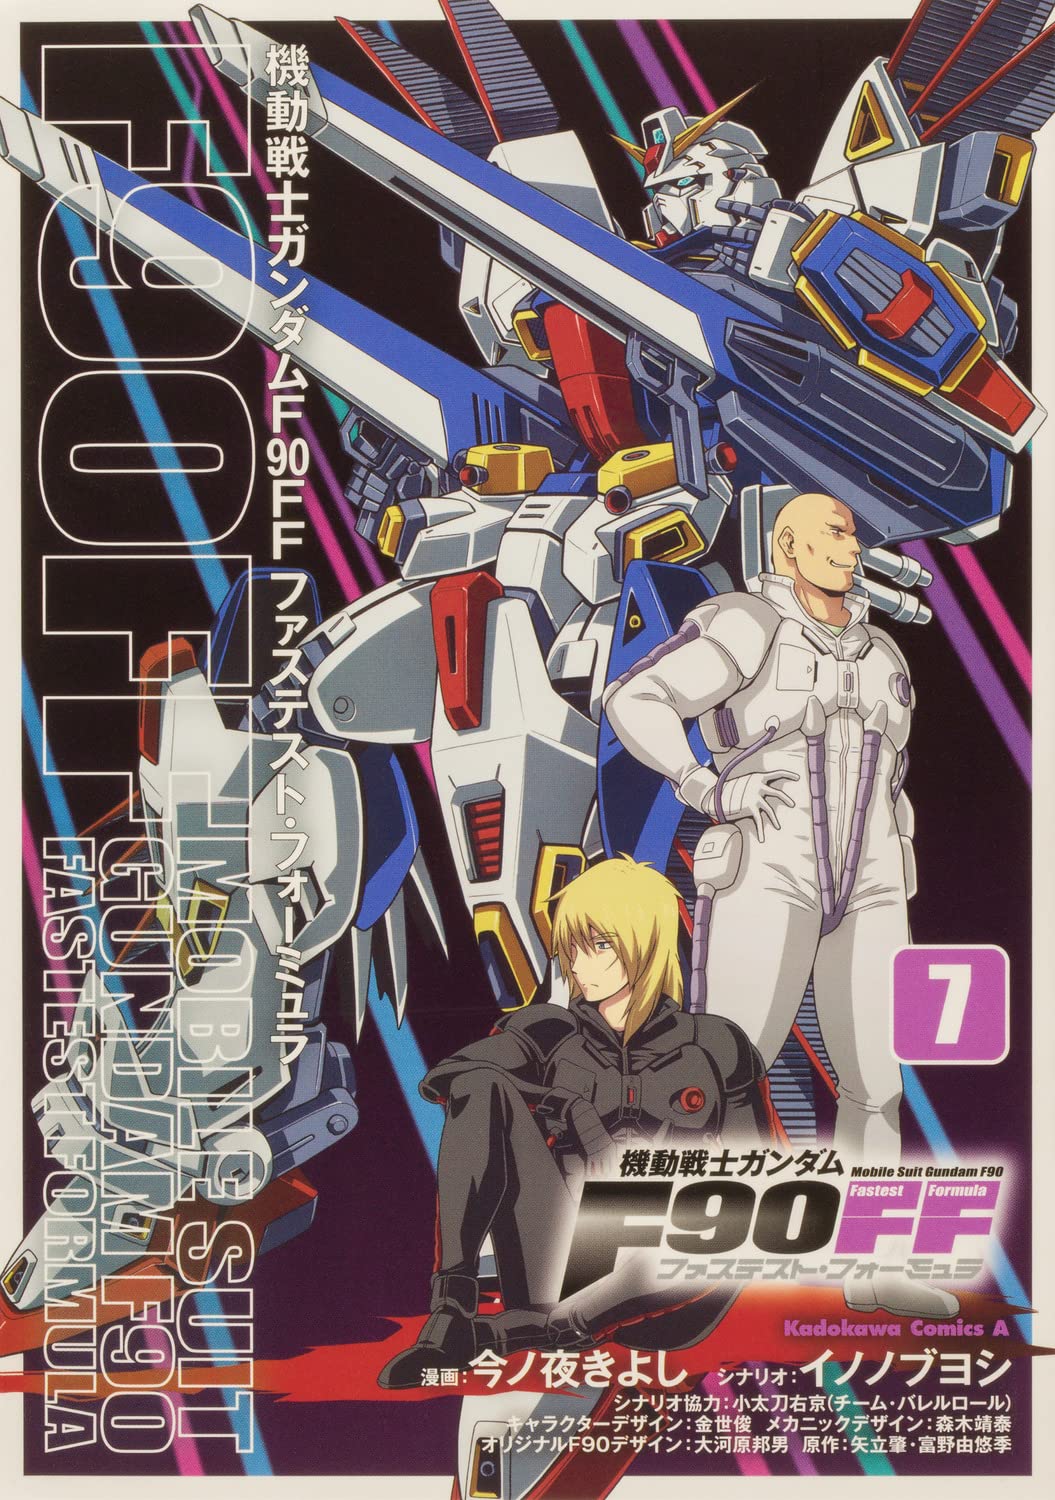 Mobile Suit Gundam F90FF Fastest Formula #7 /Comic